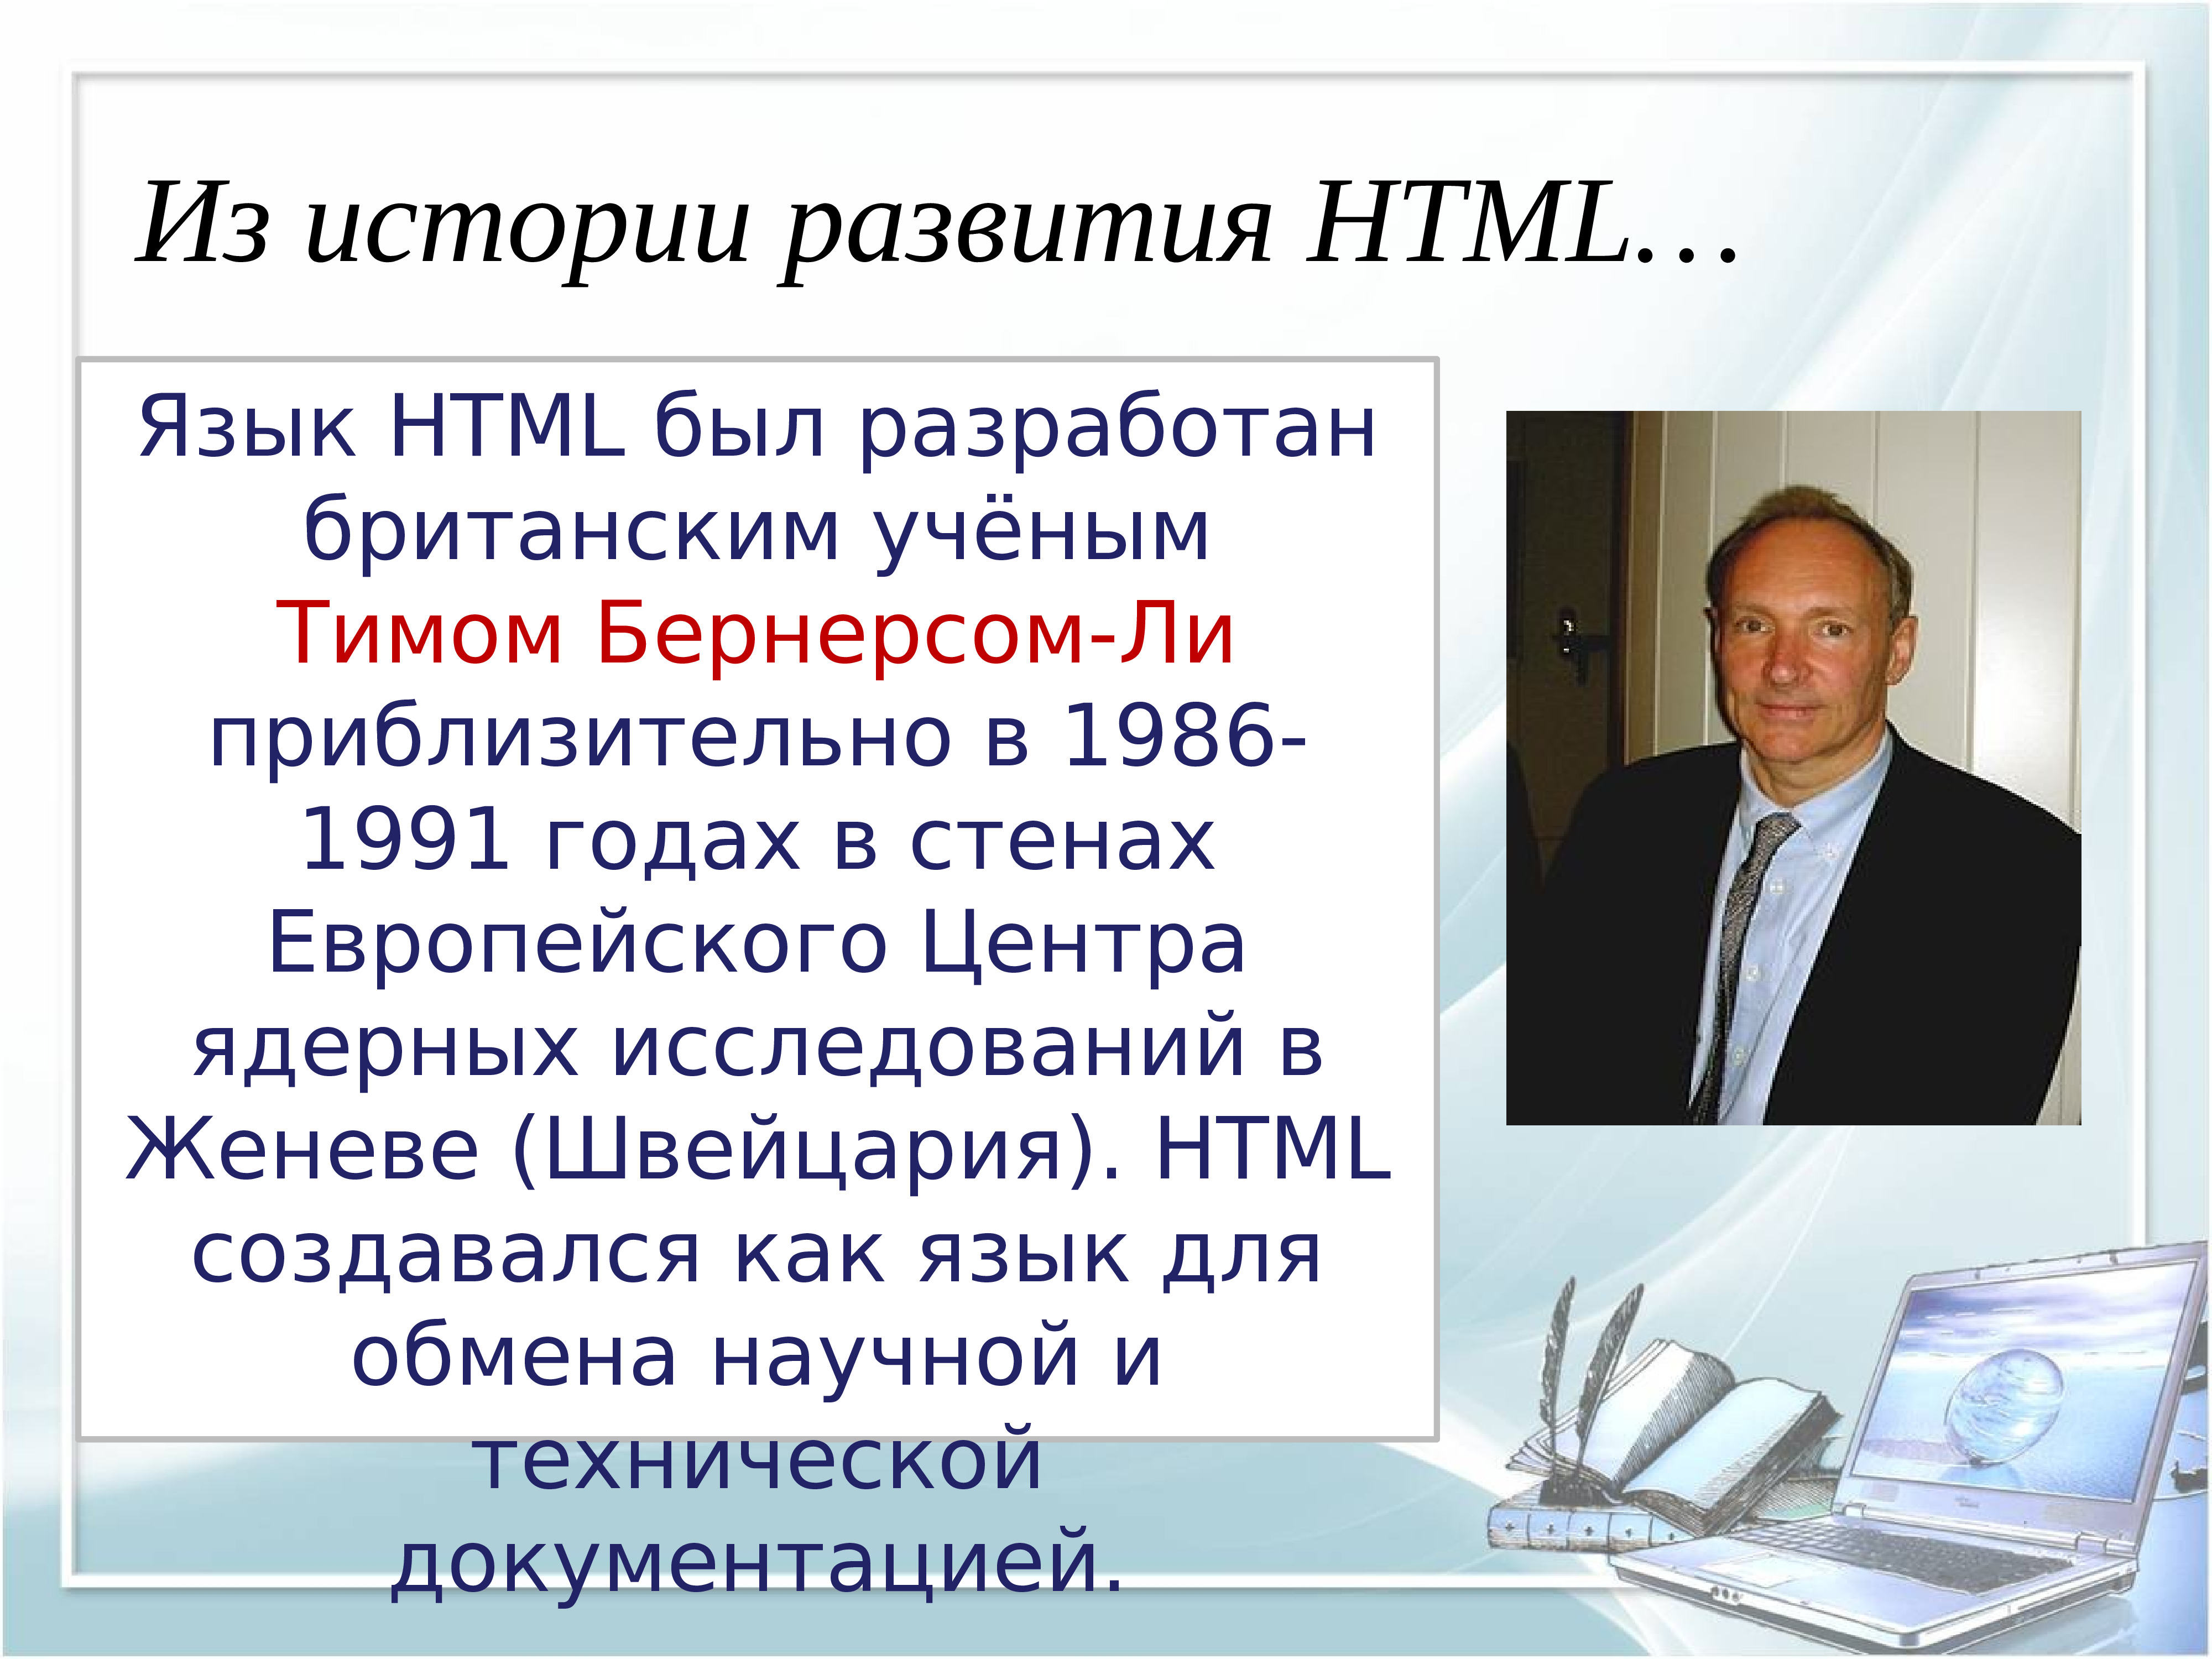 История возникновения html